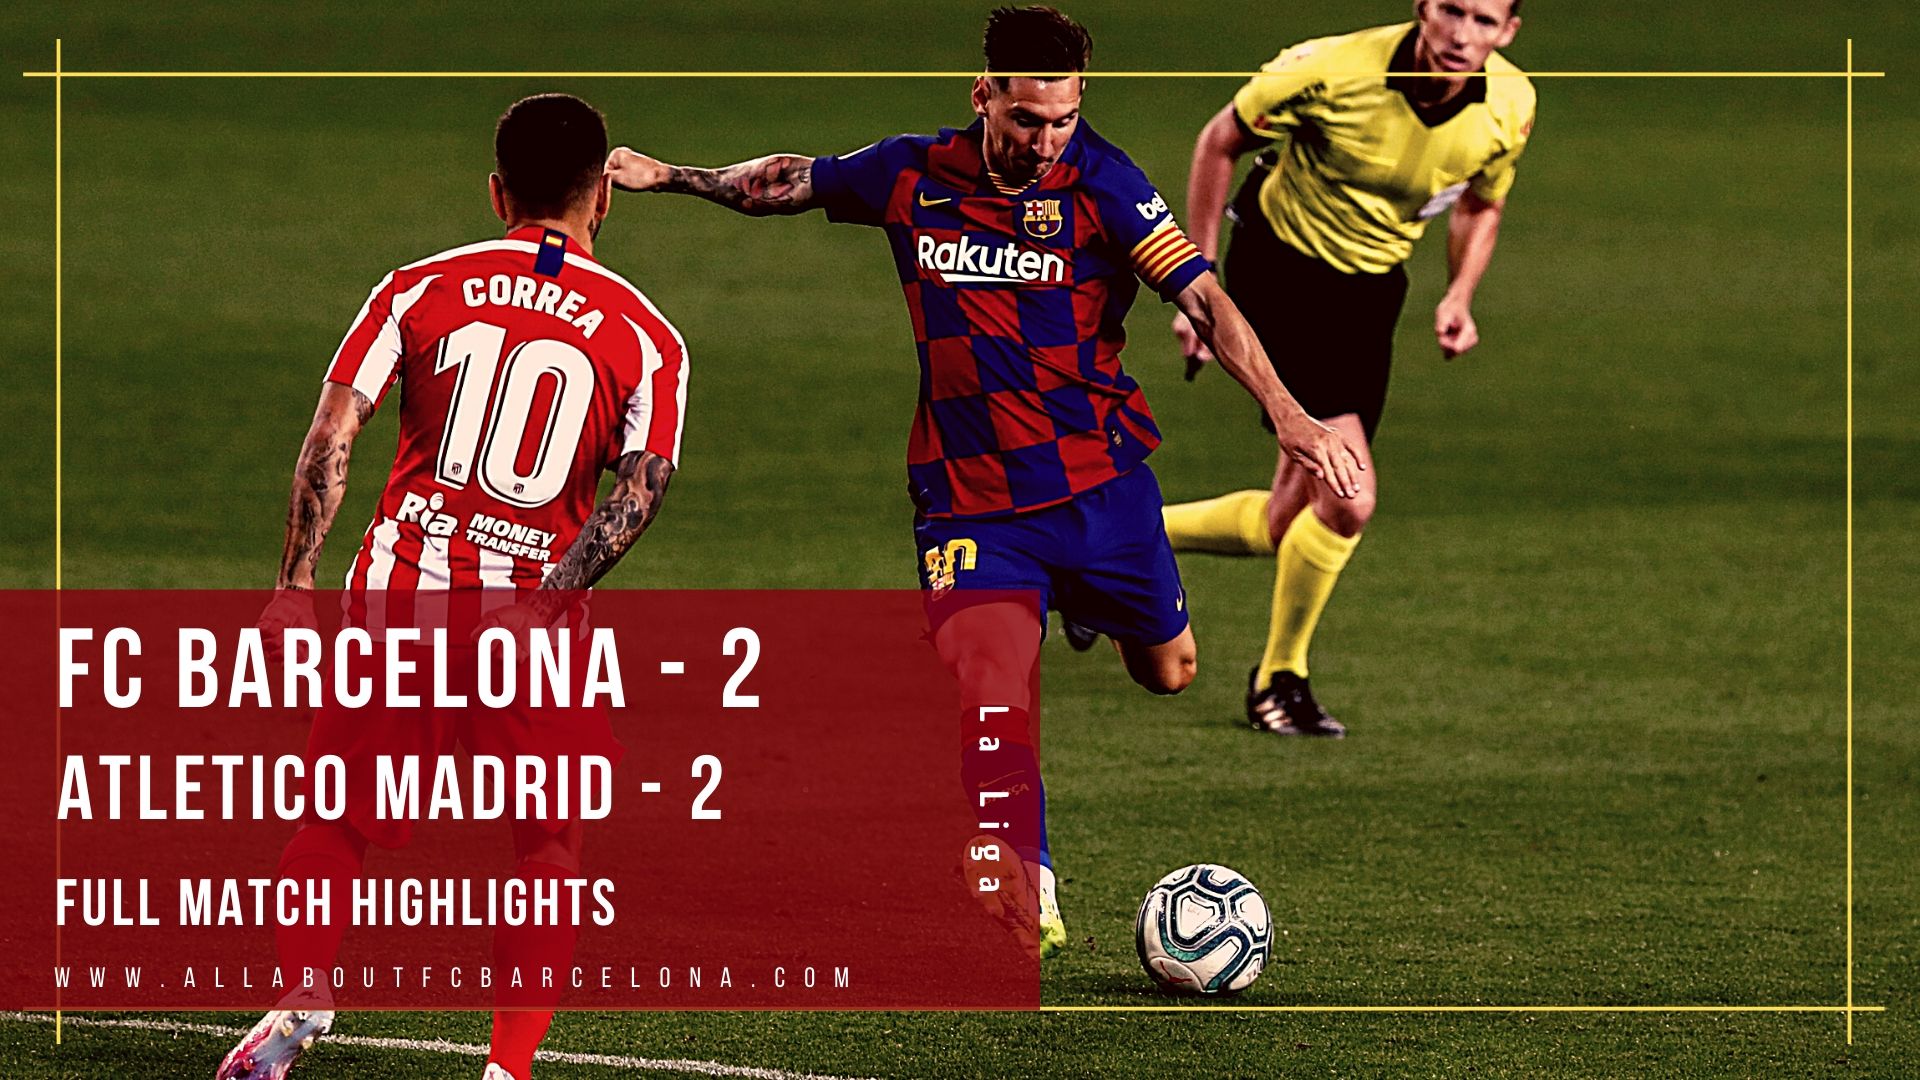 FC Barcelona Atletico Madrid Highlights | - 2, Atletico Madrid - 2